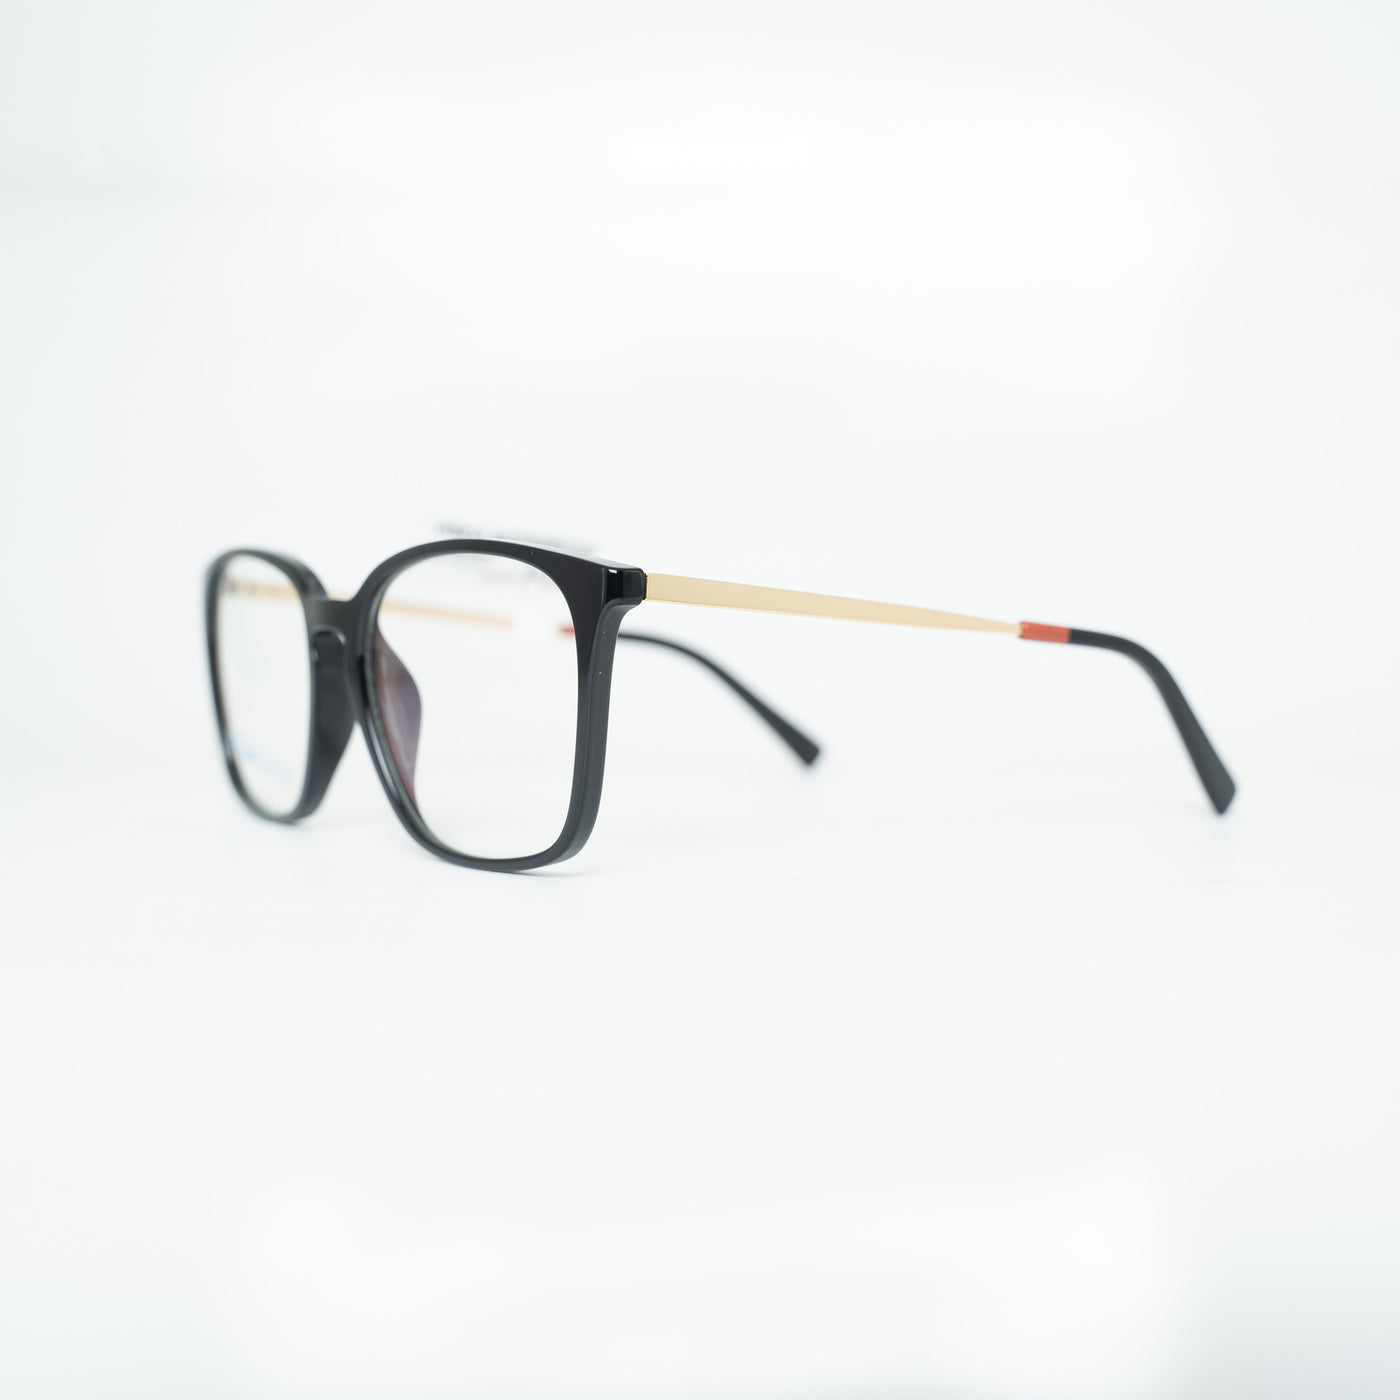 Tony Morgan TM2079BLK54 | Eyeglasses - Vision Express Optical Philippines